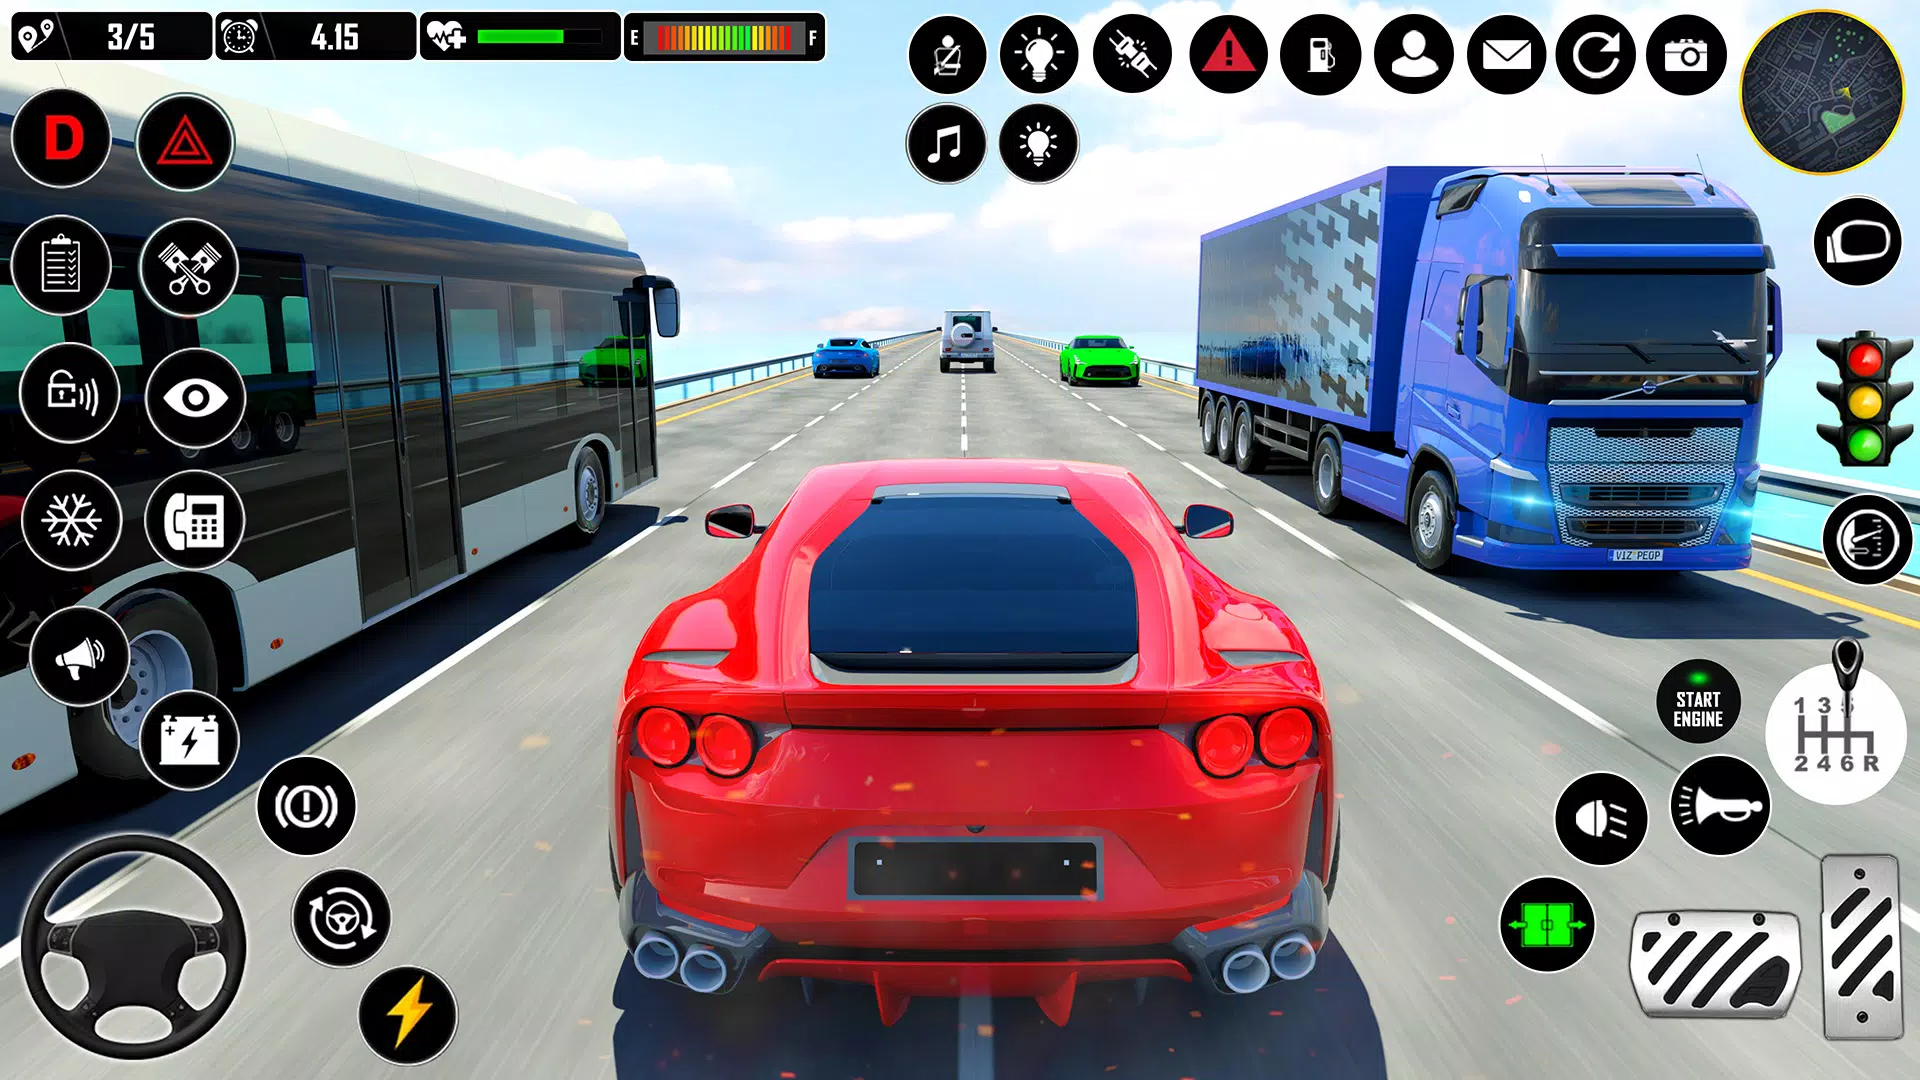 Download do APK de jogo de carro de corrida para Android